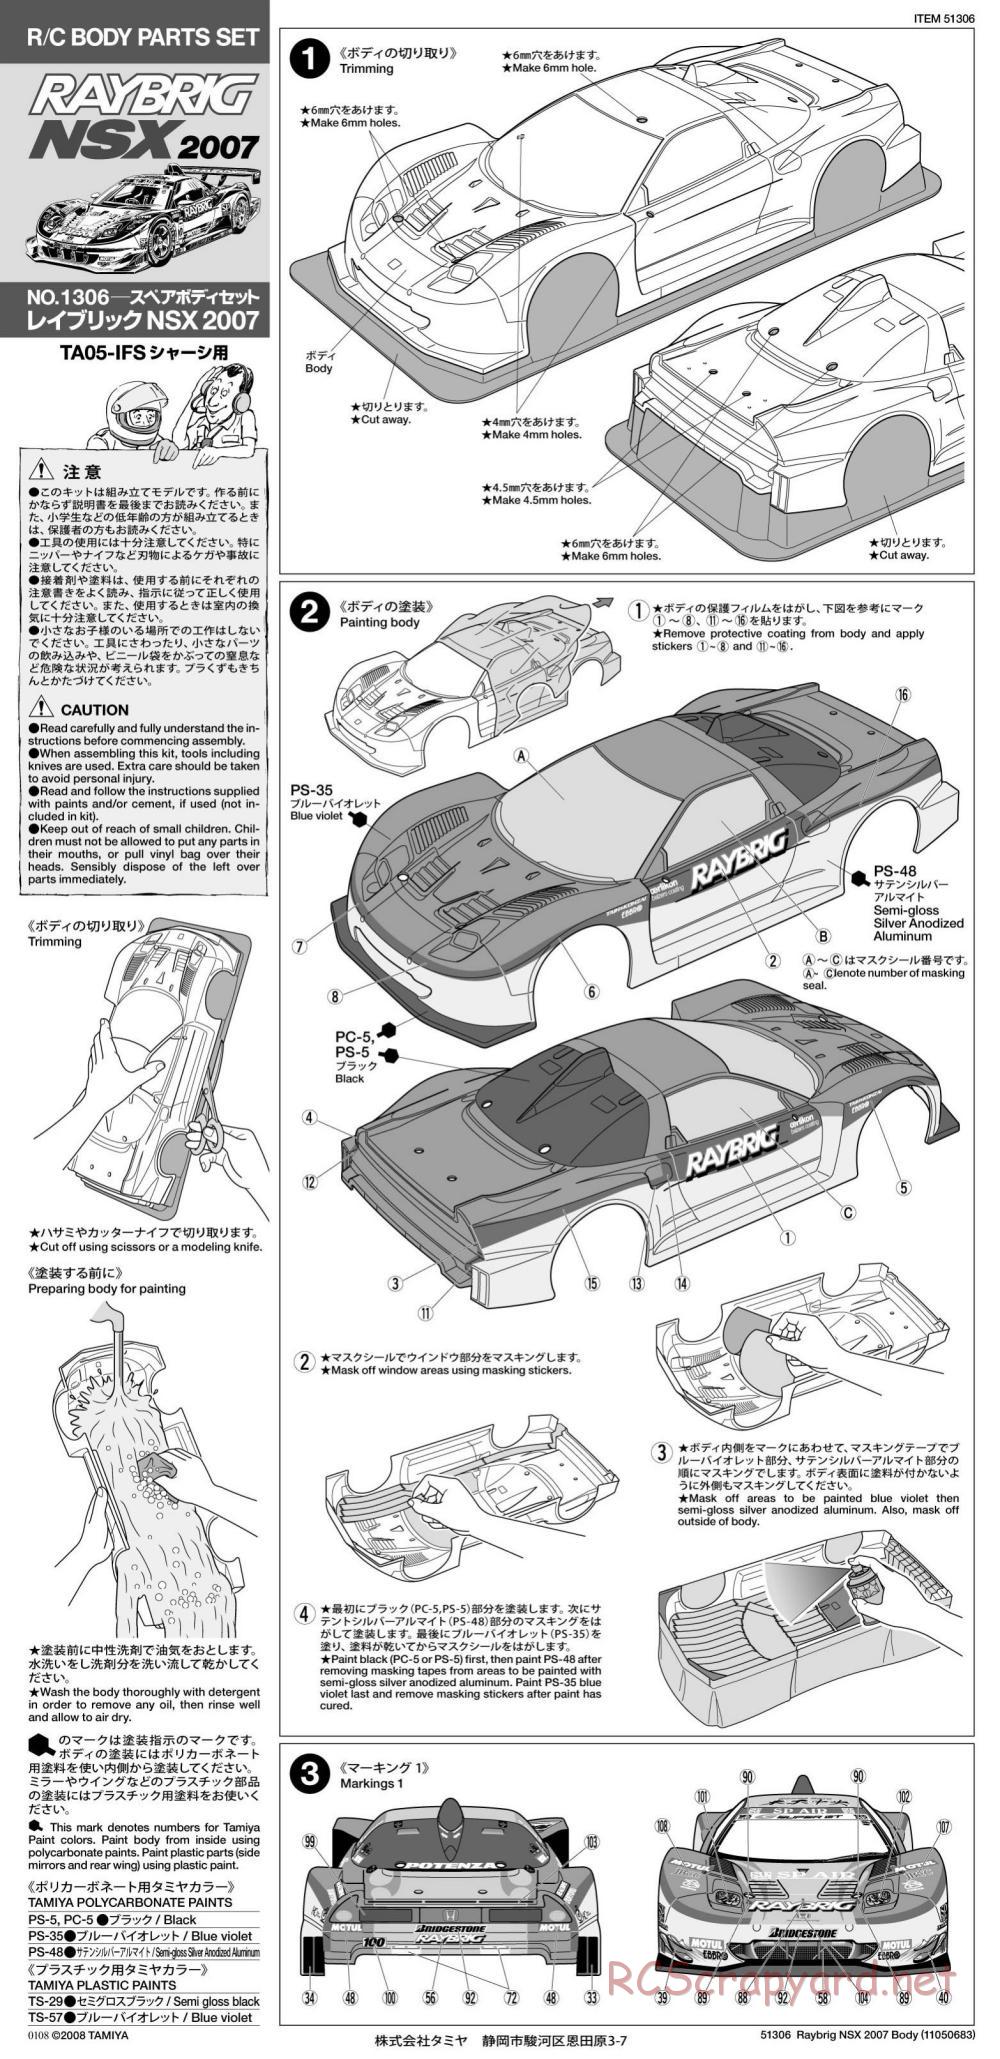 Tamiya - Raybrig NSX 2007 - TA05-IFS Chassis - Body Manual - Page 1